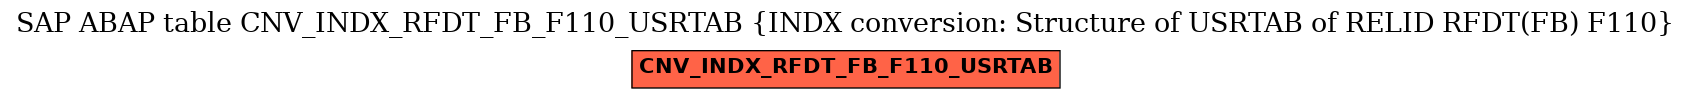 E-R Diagram for table CNV_INDX_RFDT_FB_F110_USRTAB (INDX conversion: Structure of USRTAB of RELID RFDT(FB) F110)